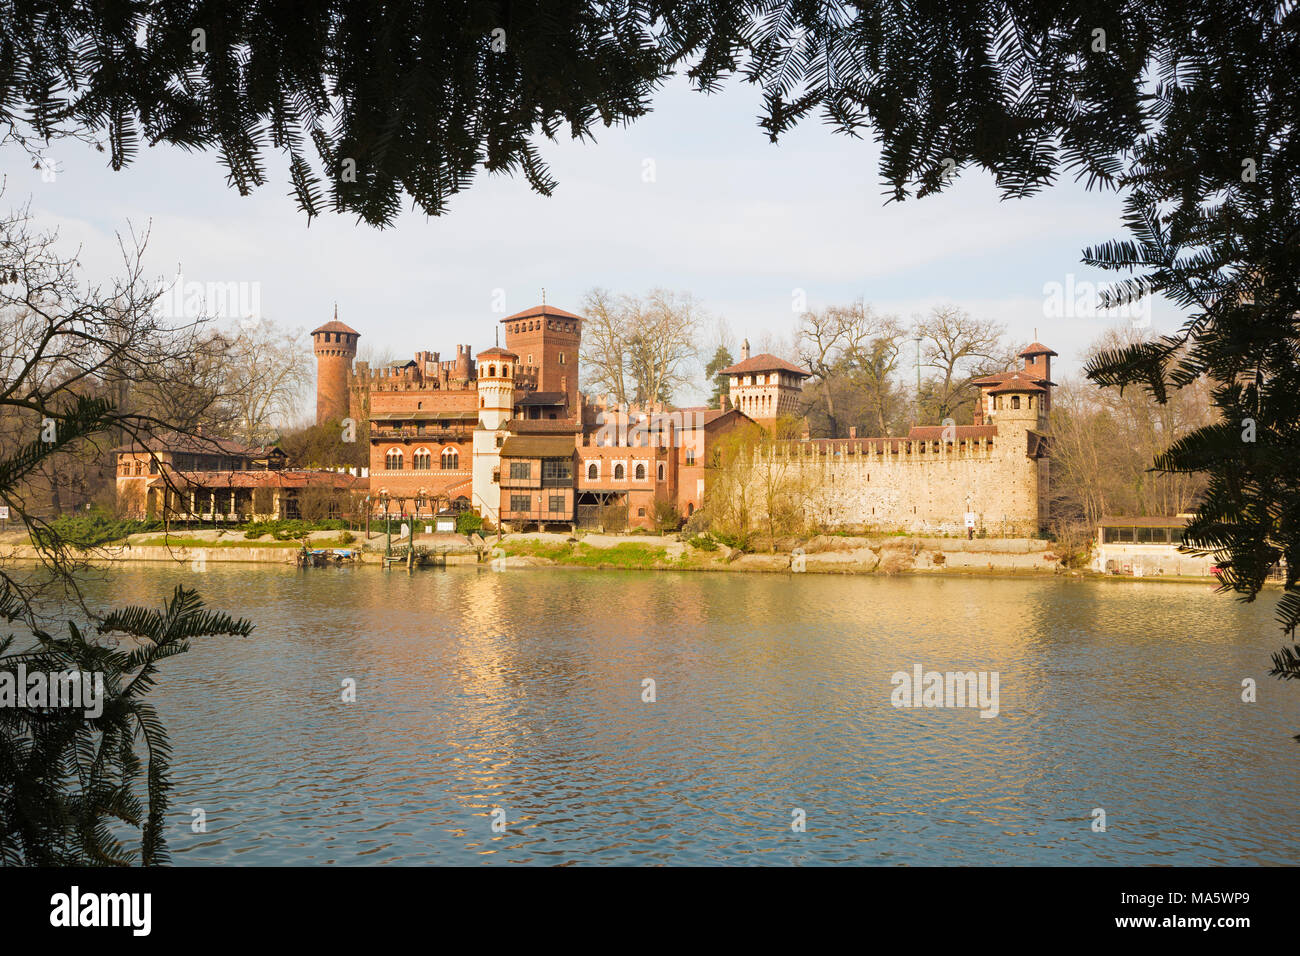 Turin - The Borgo Medievale castle. Stock Photo